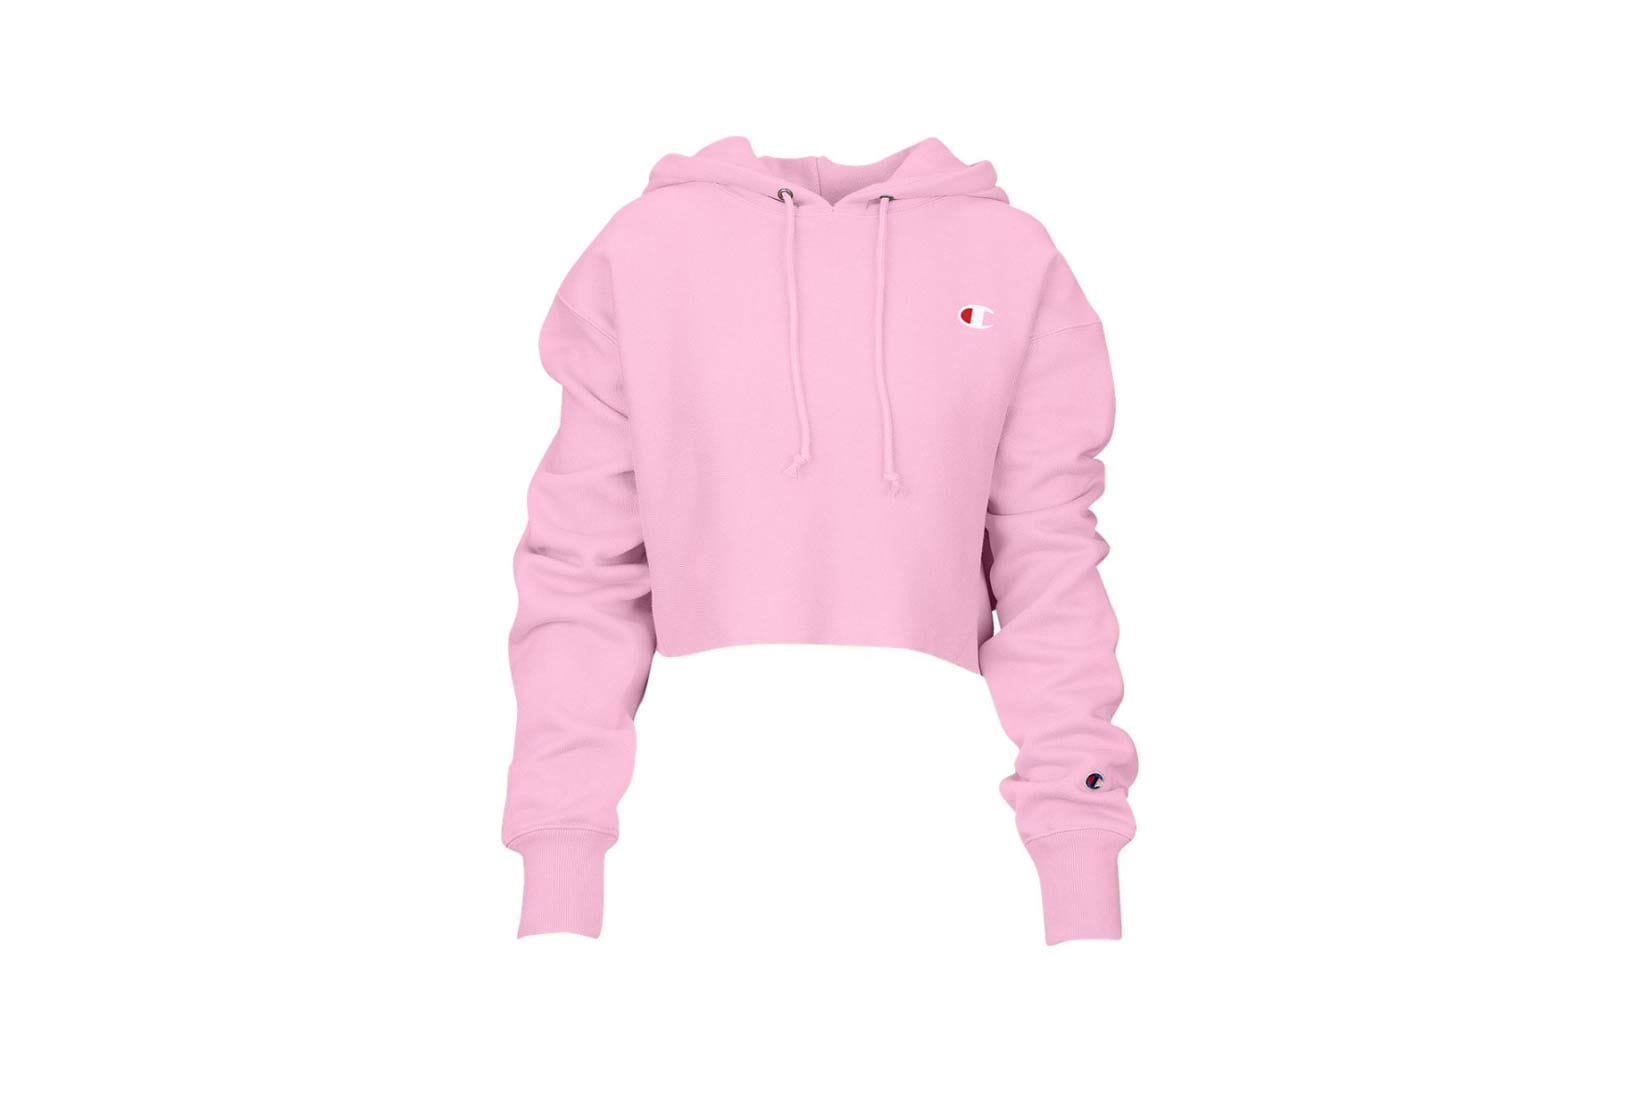 pink champion cropped sweatshirt